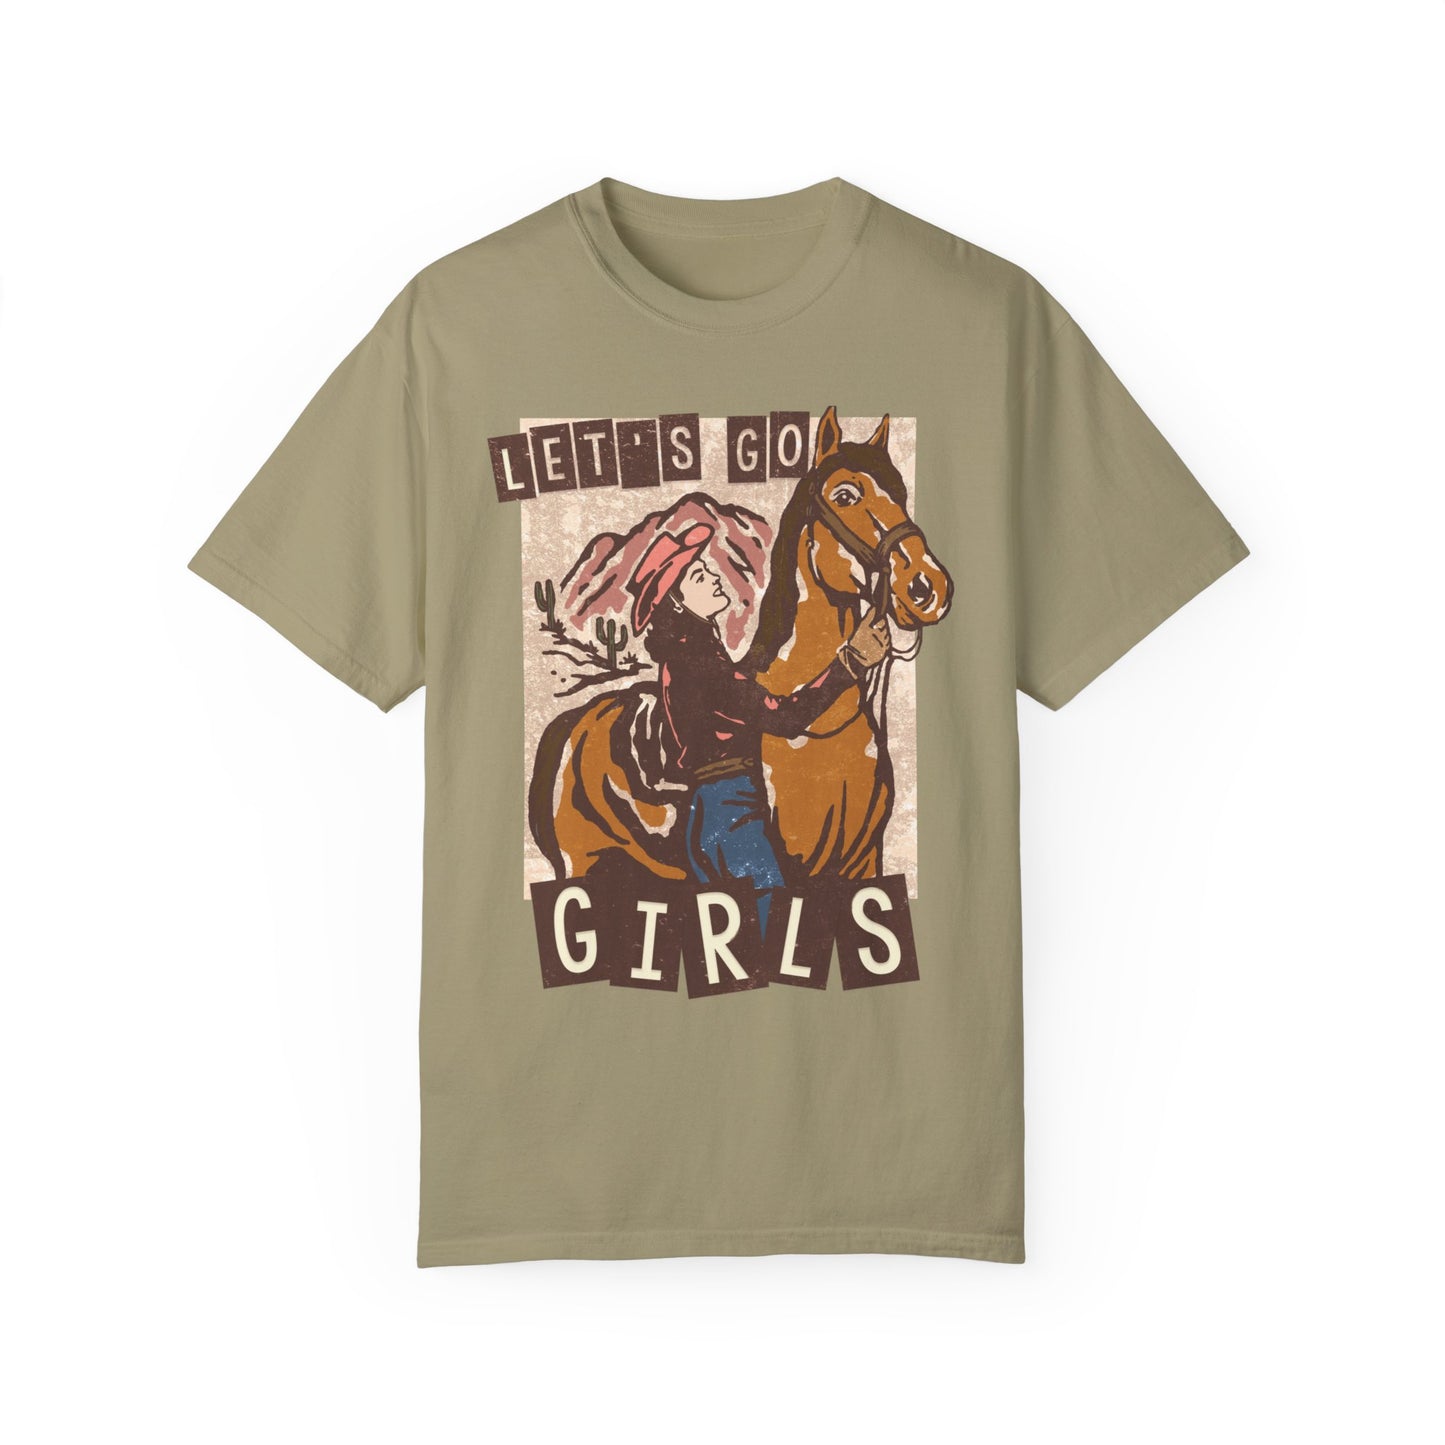 Lets Go Girls, Western Comfort Colors T-shirt